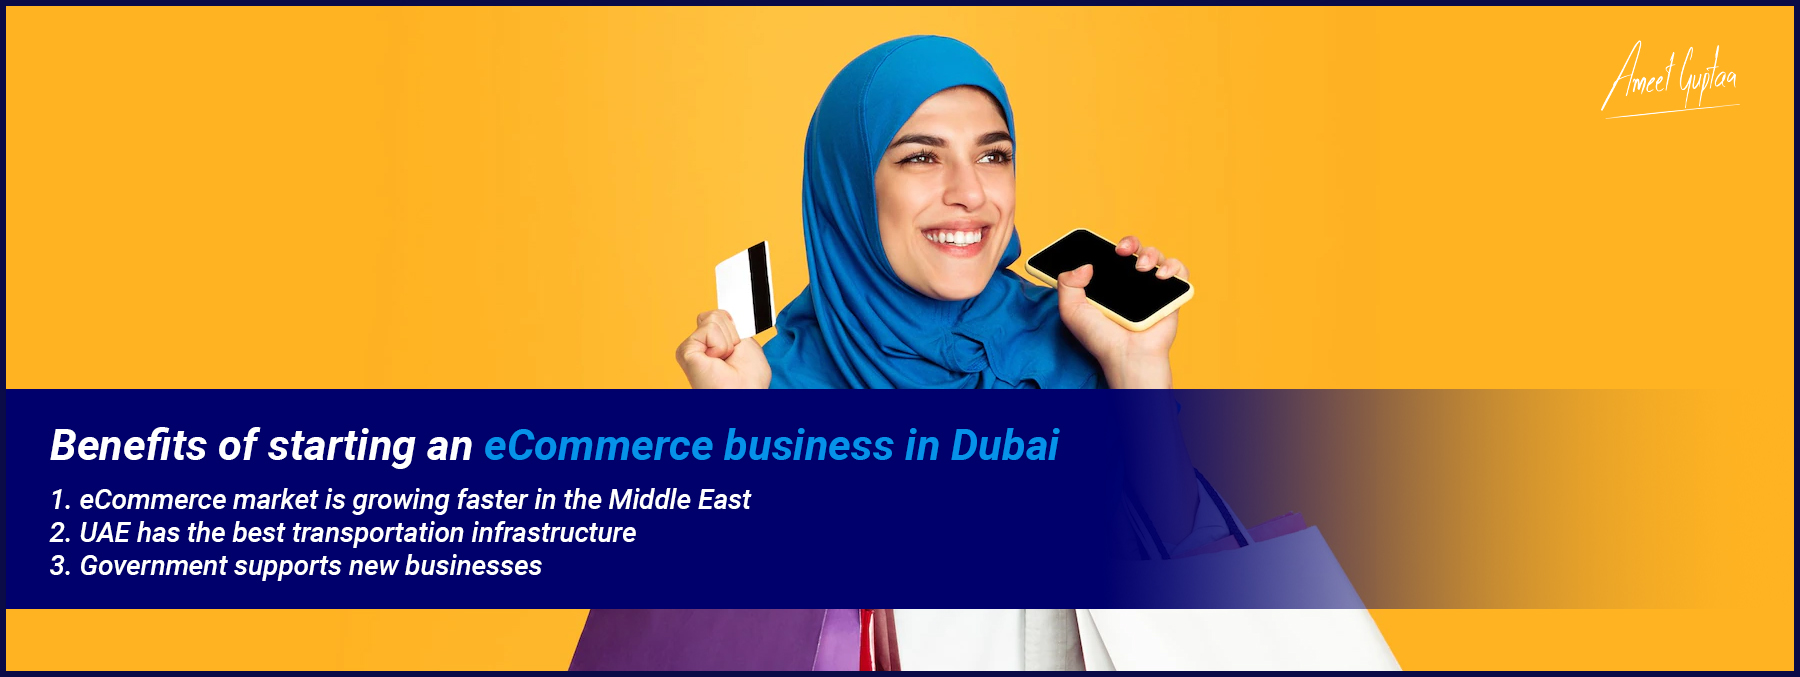 Benefits-of-starting-an-eCommerce-business-in-Dubai-AmeetGuptaa